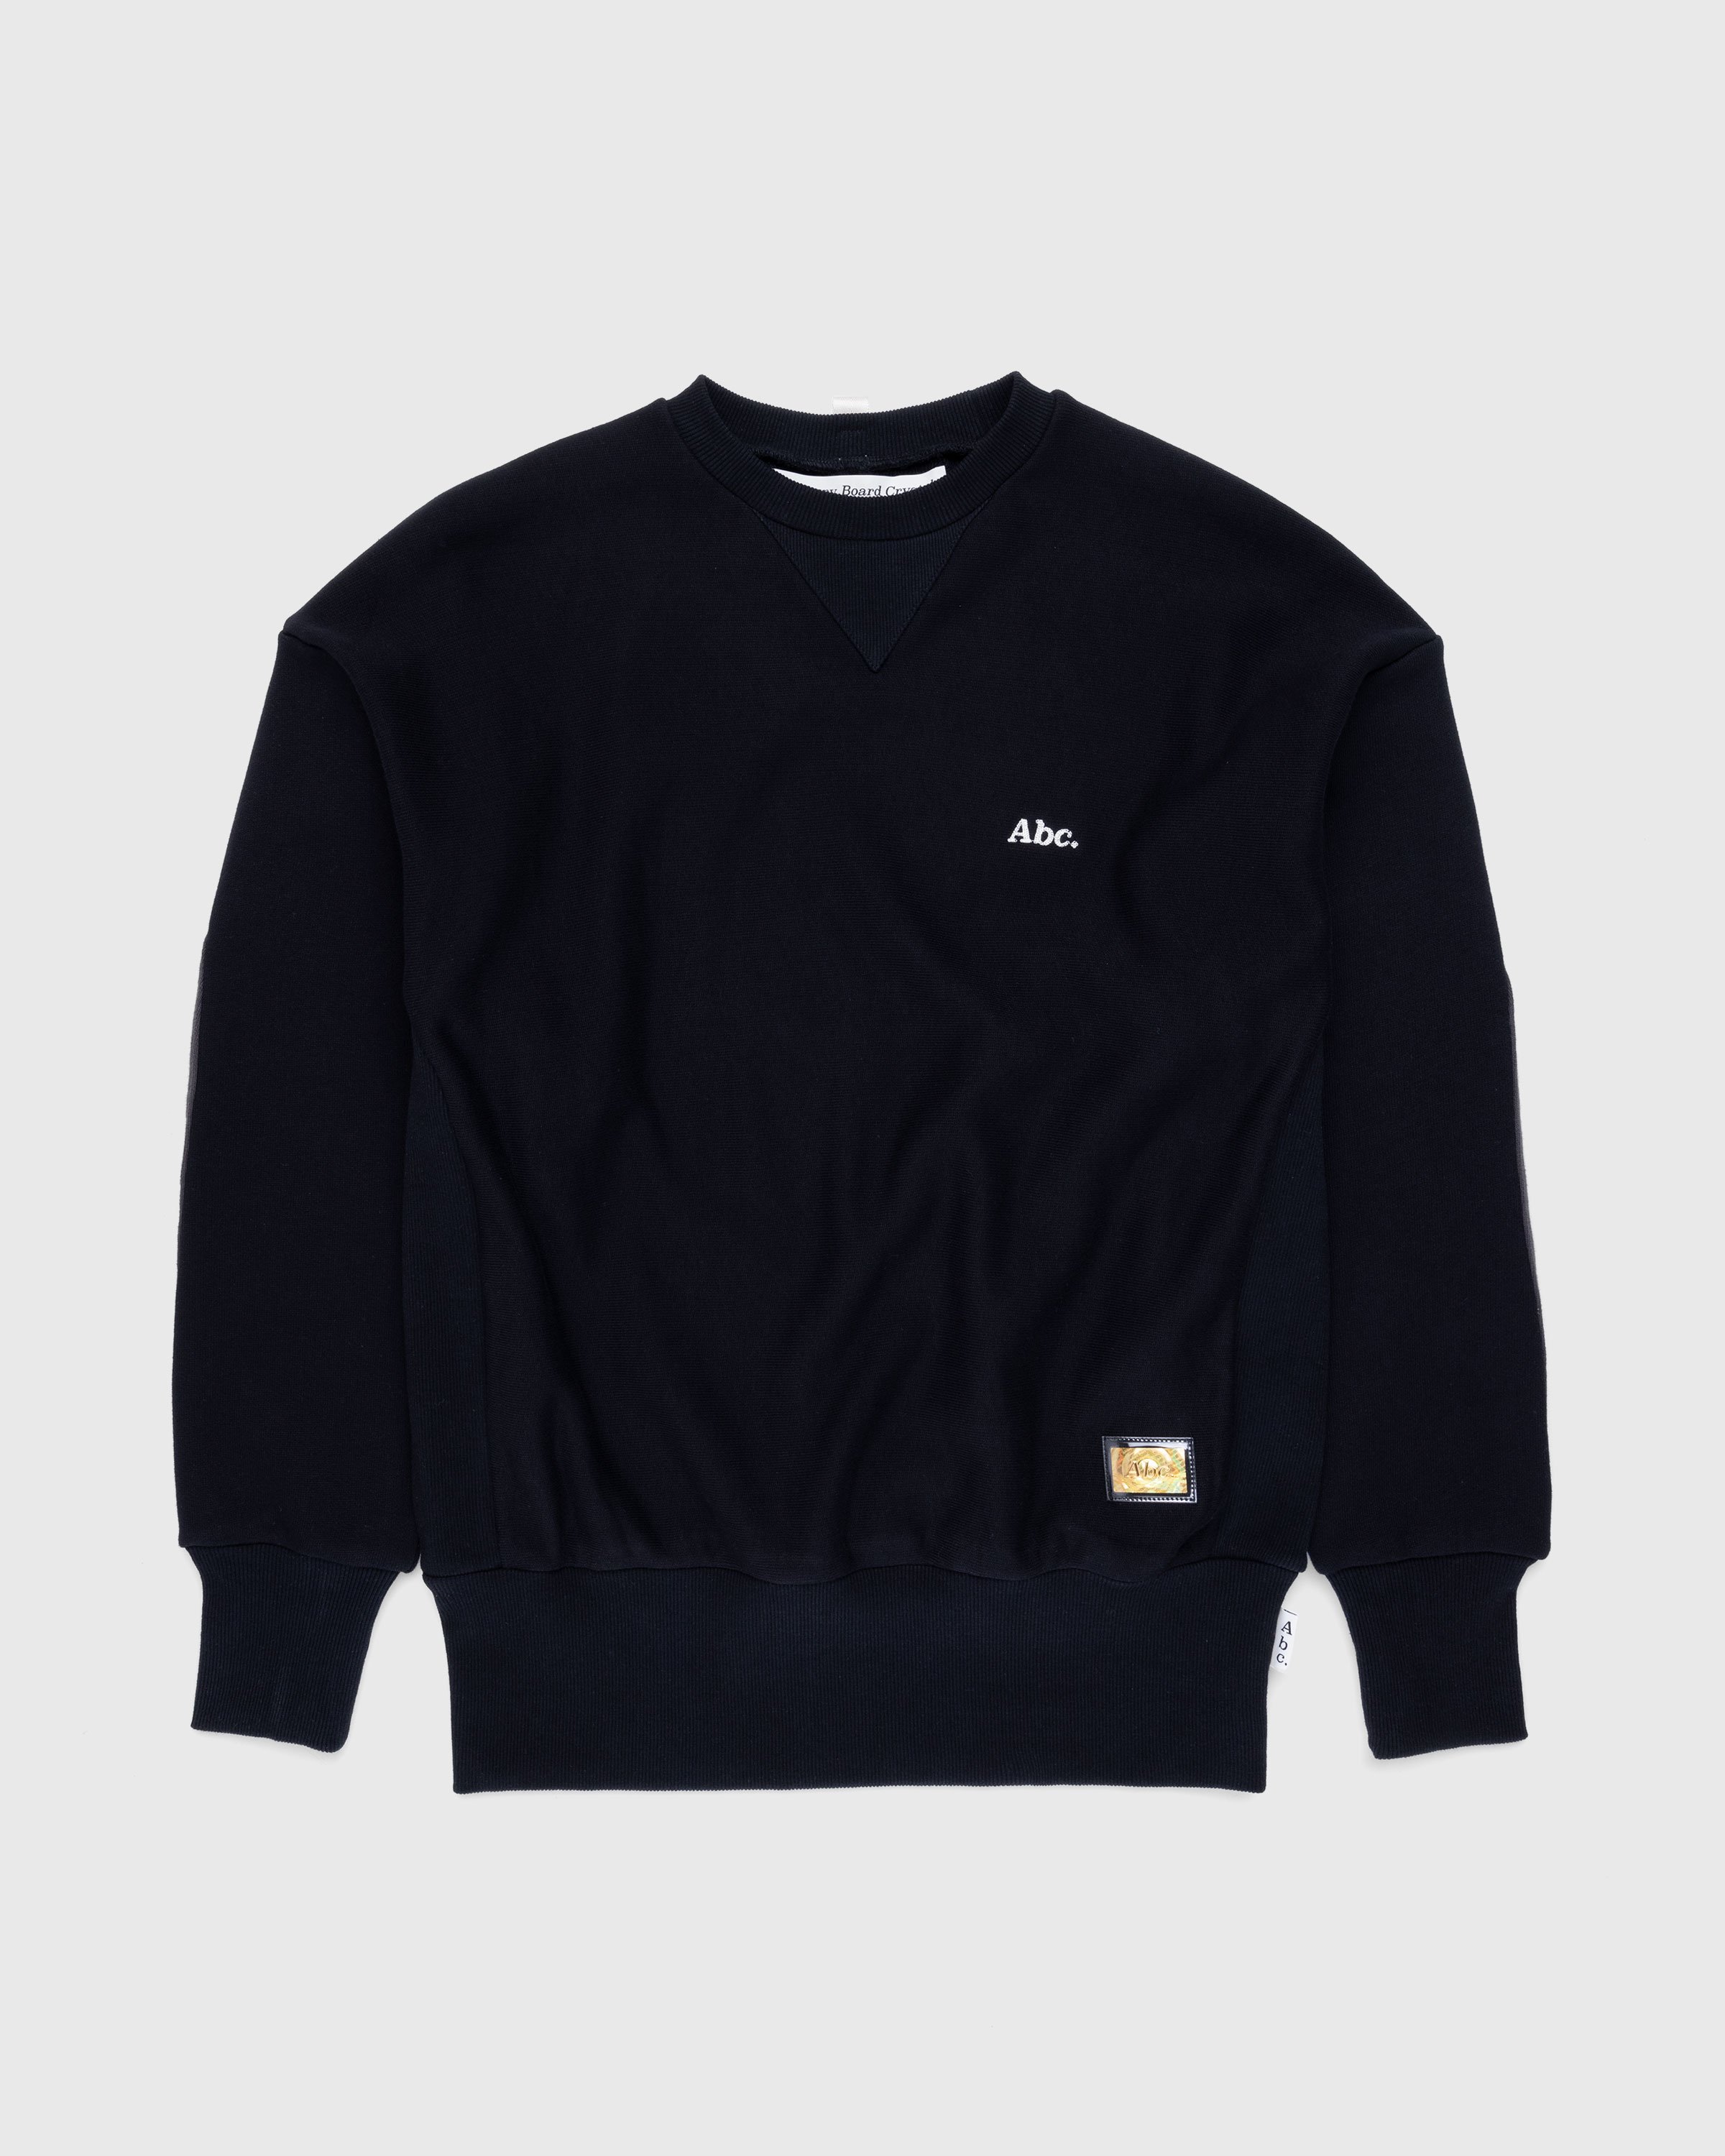 Abc. - Tri-Tone Crewneck Sweatshirt - Clothing - Black - Image 1